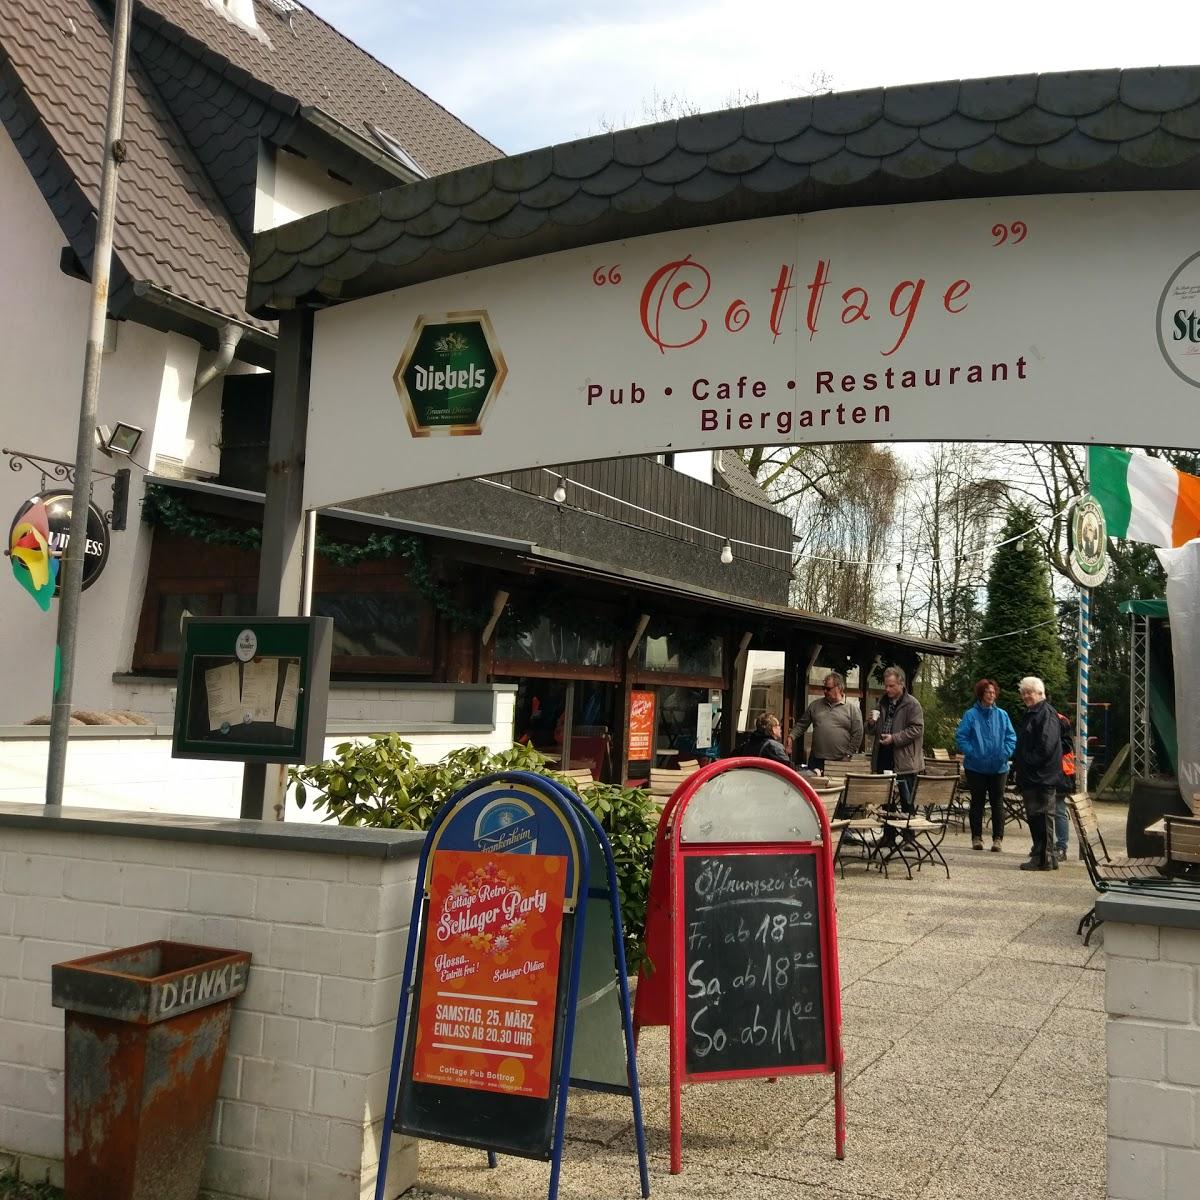 Restaurant "Cottage Pub & Cafe" in Bottrop